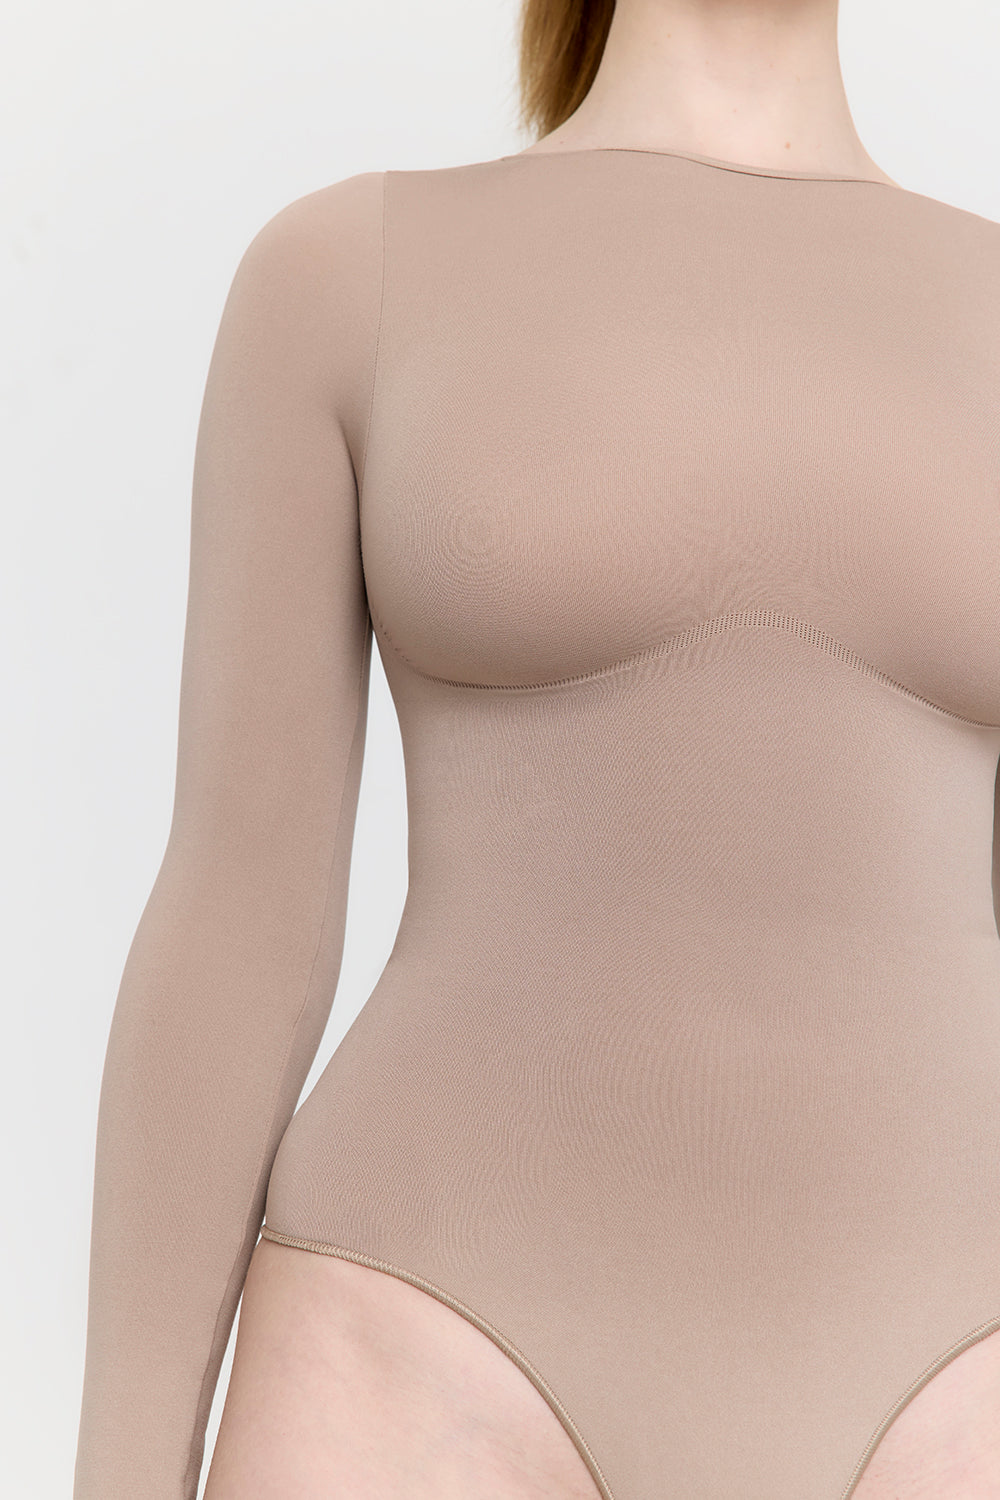 Women's Naked Wardrobe Bodysuits - up to −50%